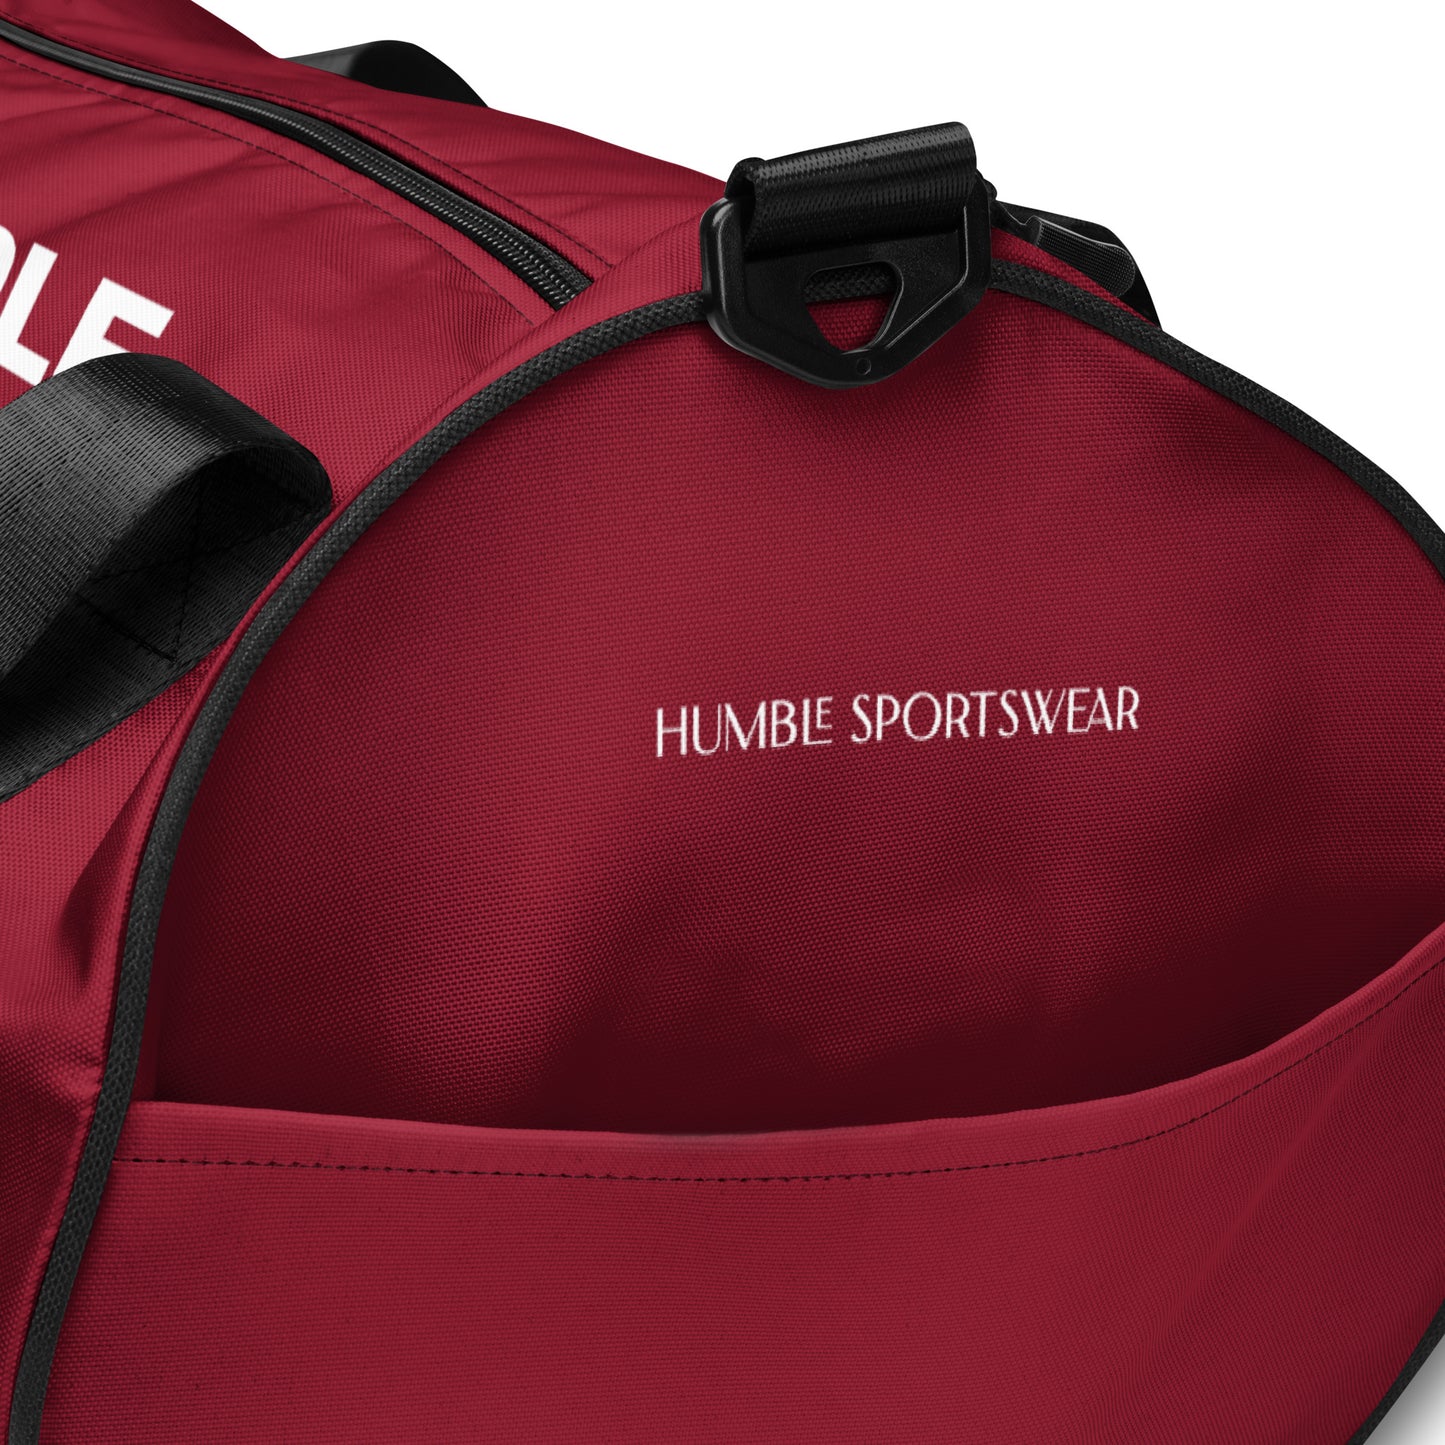 Humble Sportswear, duffle bag, utility bag, gym bag, sports equipment bag